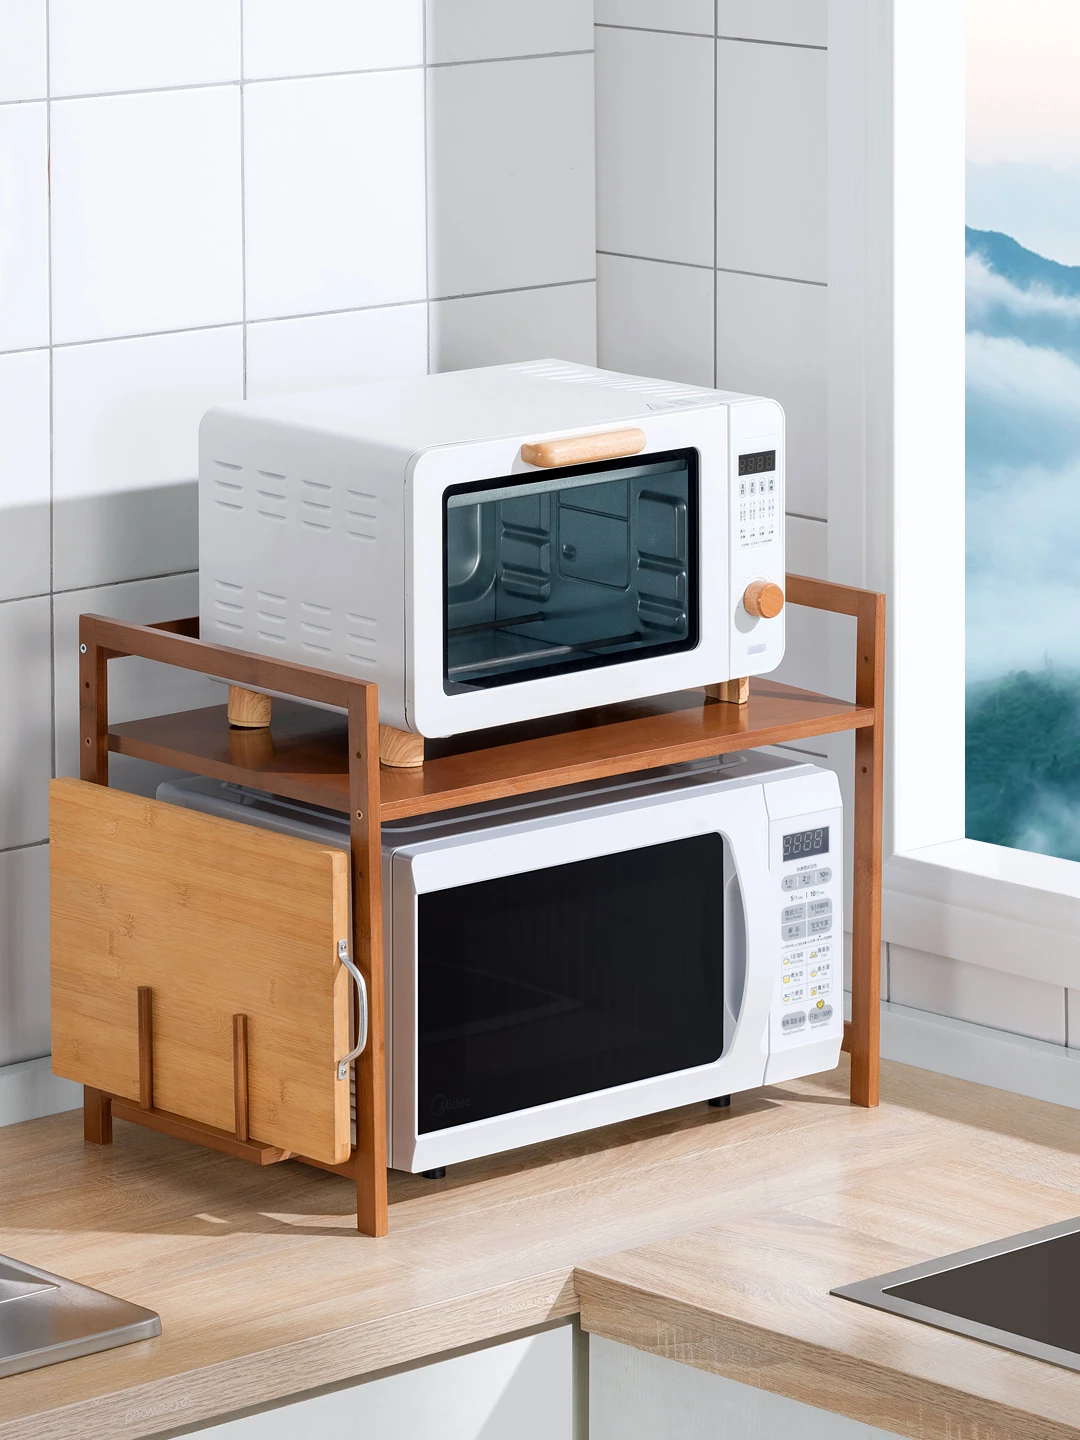 The microwave oven shelf microwave stand kitchen organizer kitchen  accessories dish rack Solid wood closet organizer